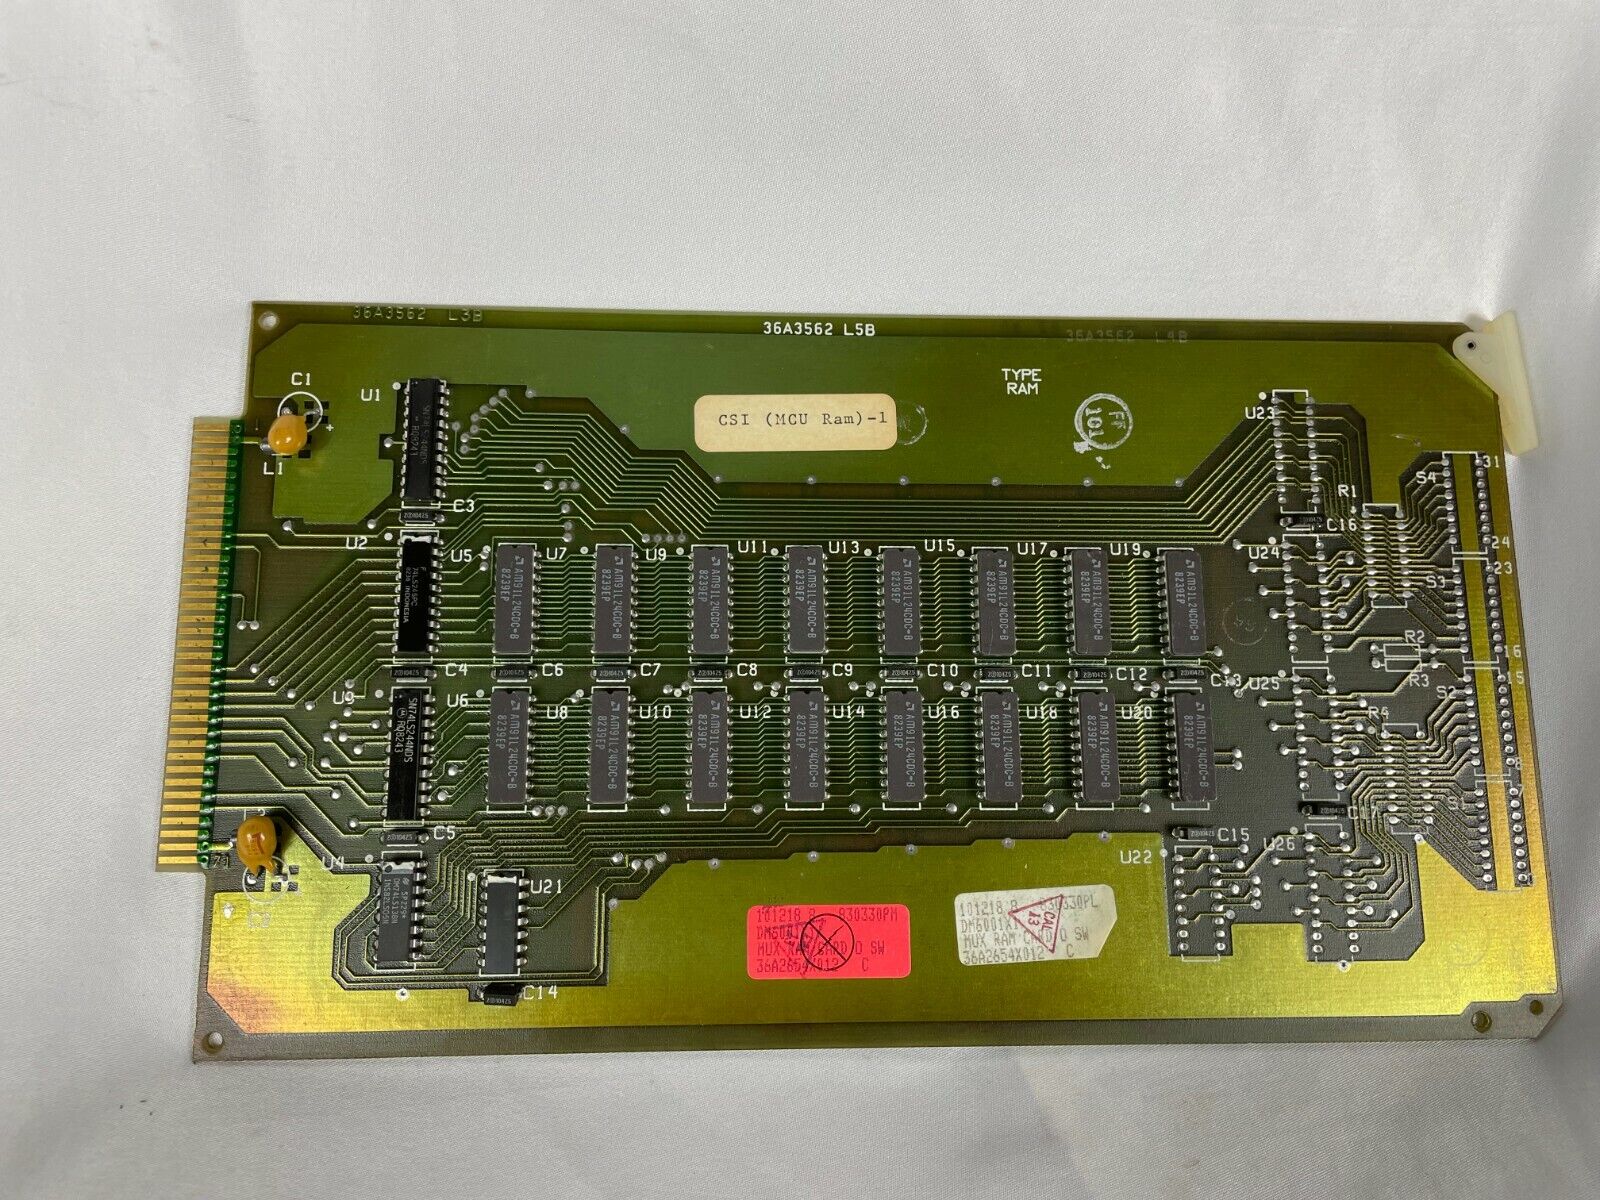 Circuit Board CSI  (MCU  Ram) 1 MUX RAM DM6001x1 36A2654X012